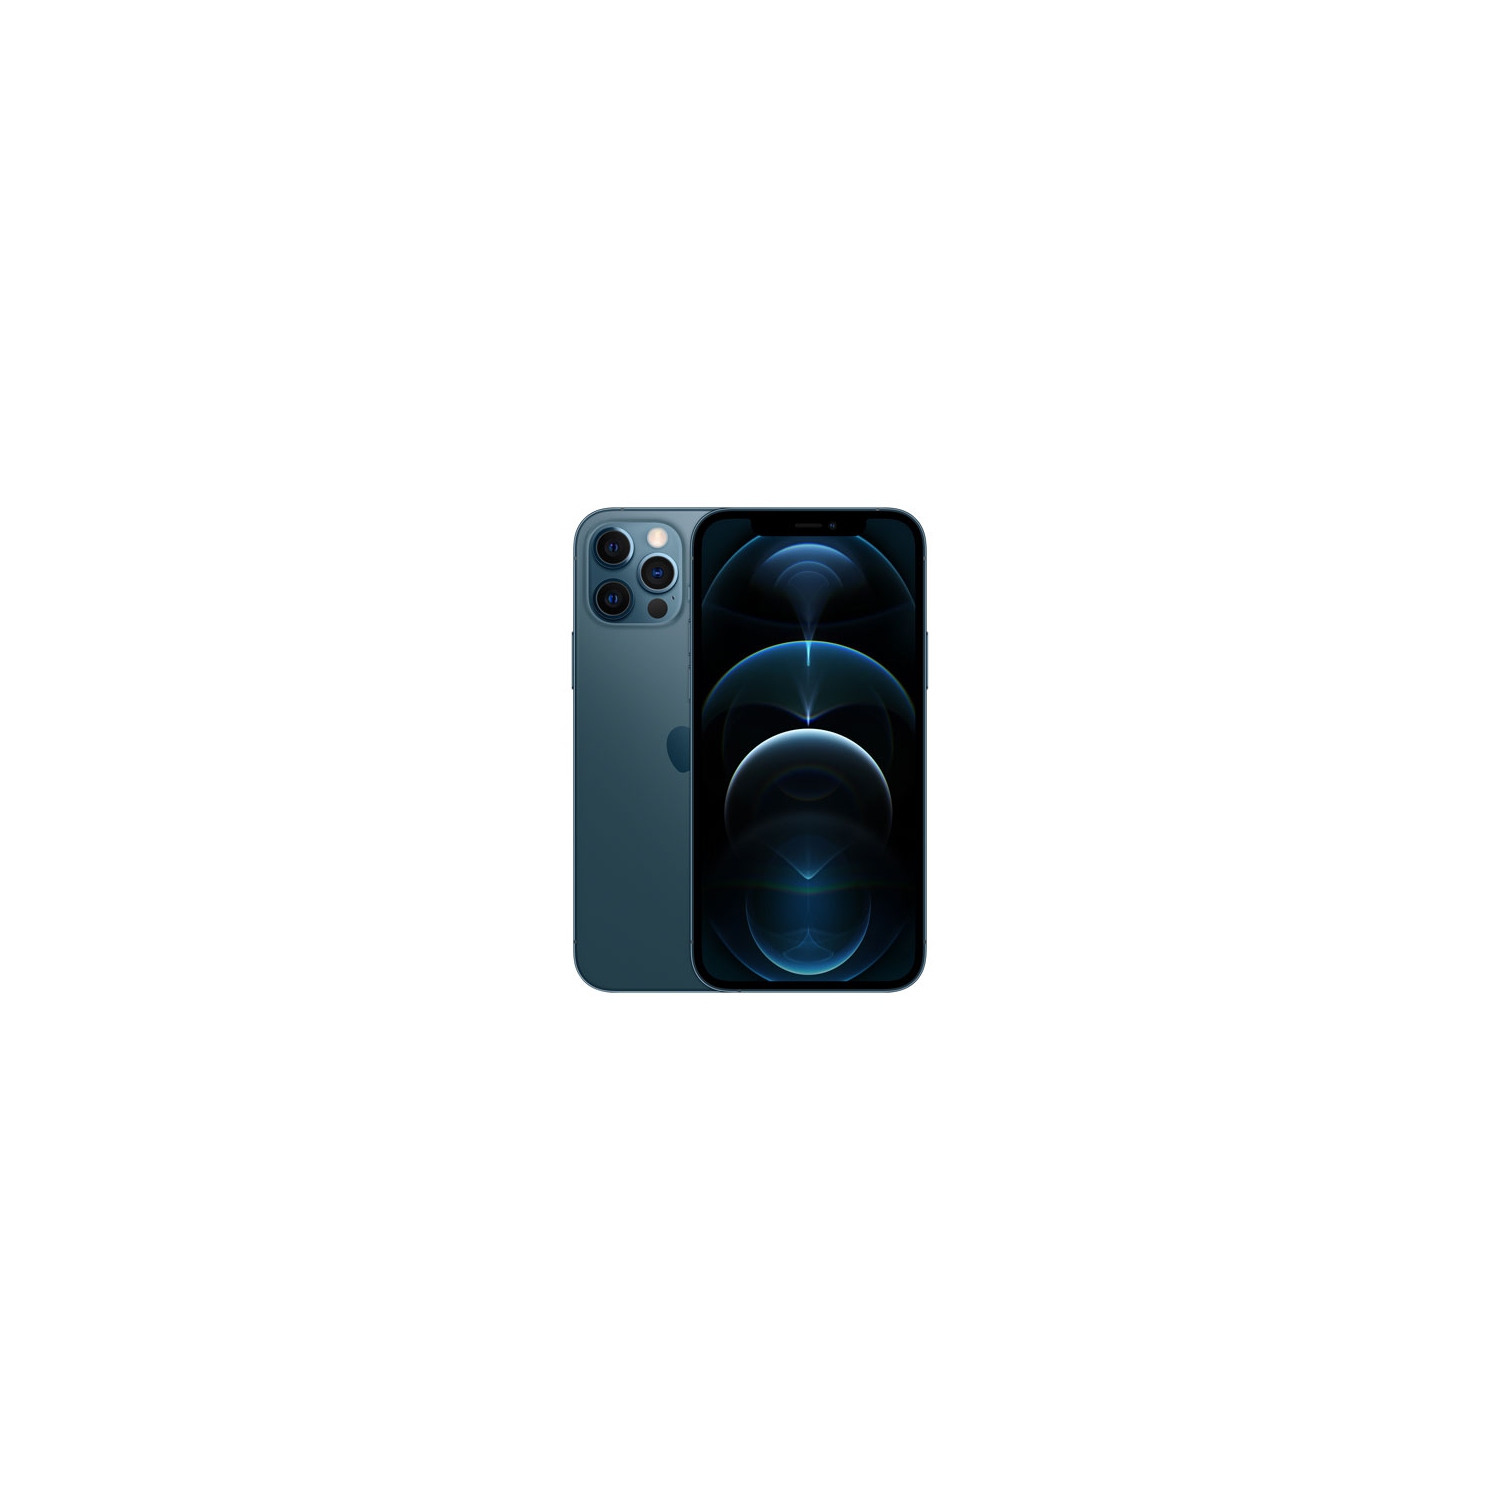 Refurbished (Good) - Apple iPhone 12 Pro 512GB Smartphone - Pacific Blue - Unlocked